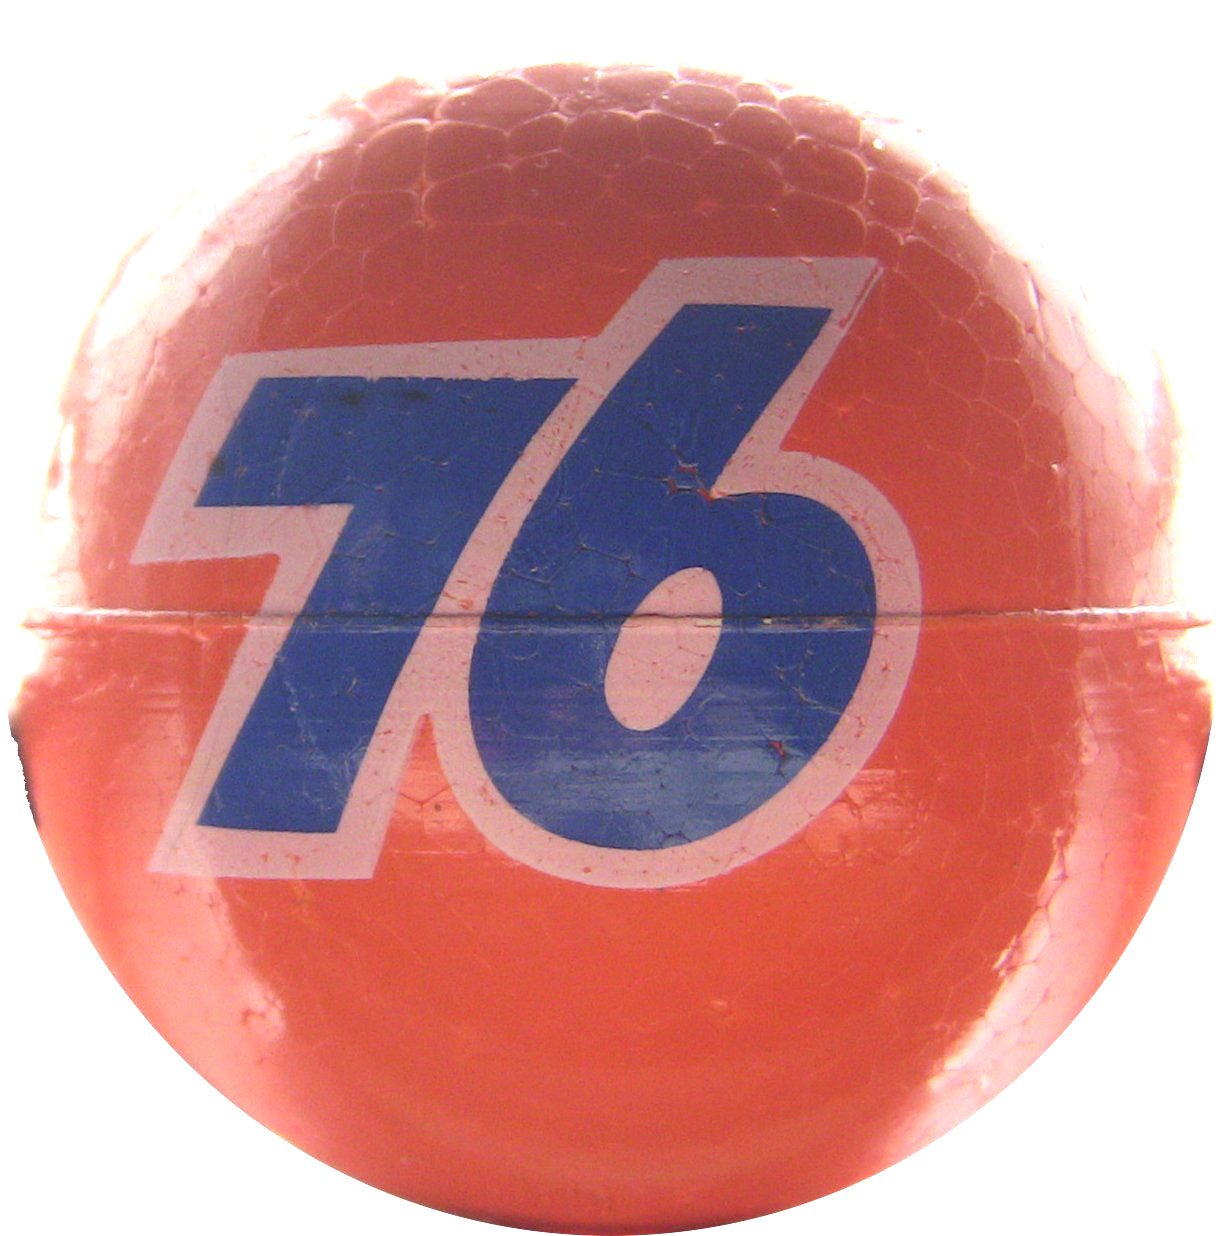 Cool balls. Unocal 76. Бренд 76. Мяч 76. 76 Unocal шар Уссурийска.